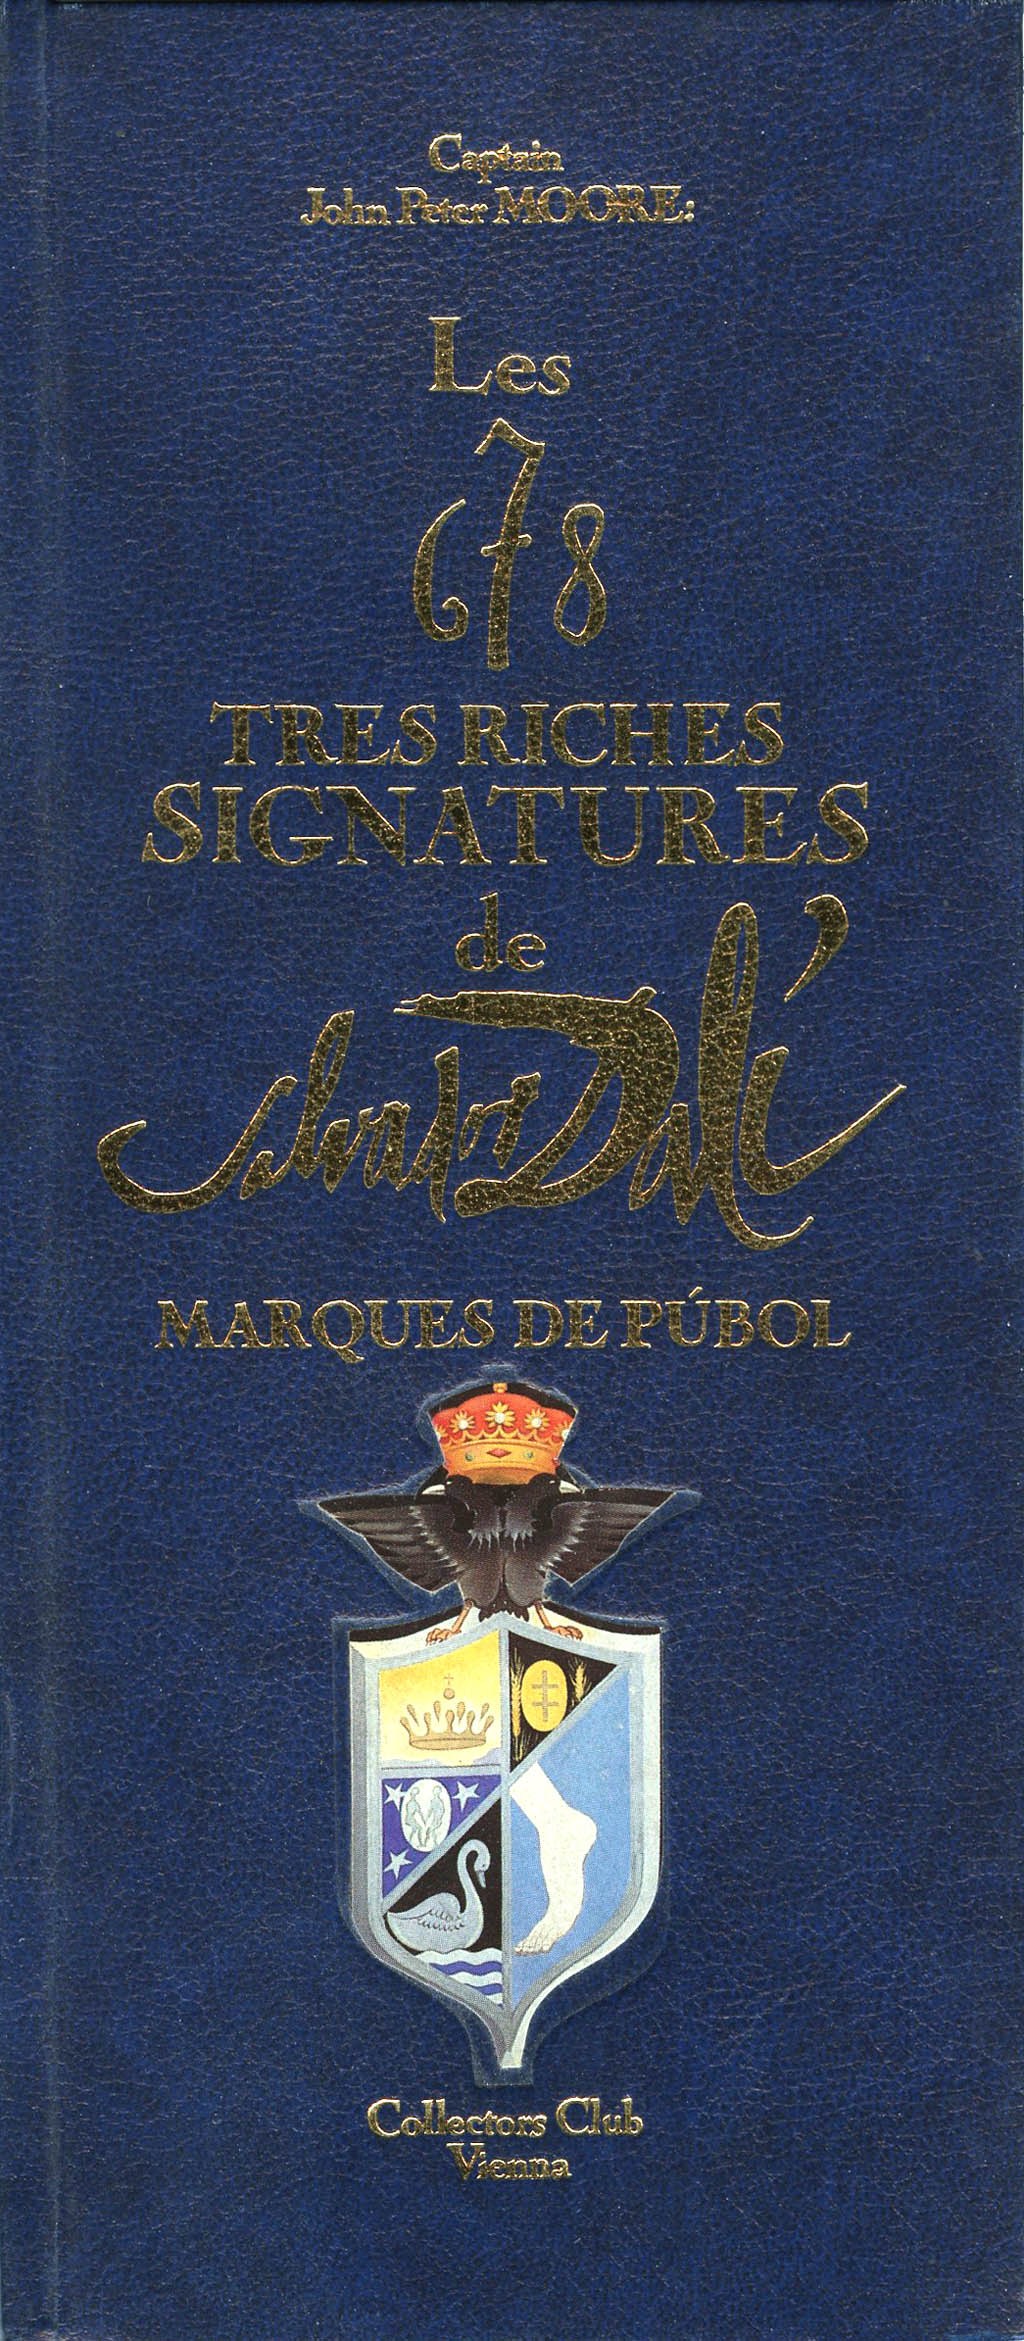 Salvador Dali - Les 678 Tres Riches Signatures de Salvador Dali - 1984 Hardbound Catalog